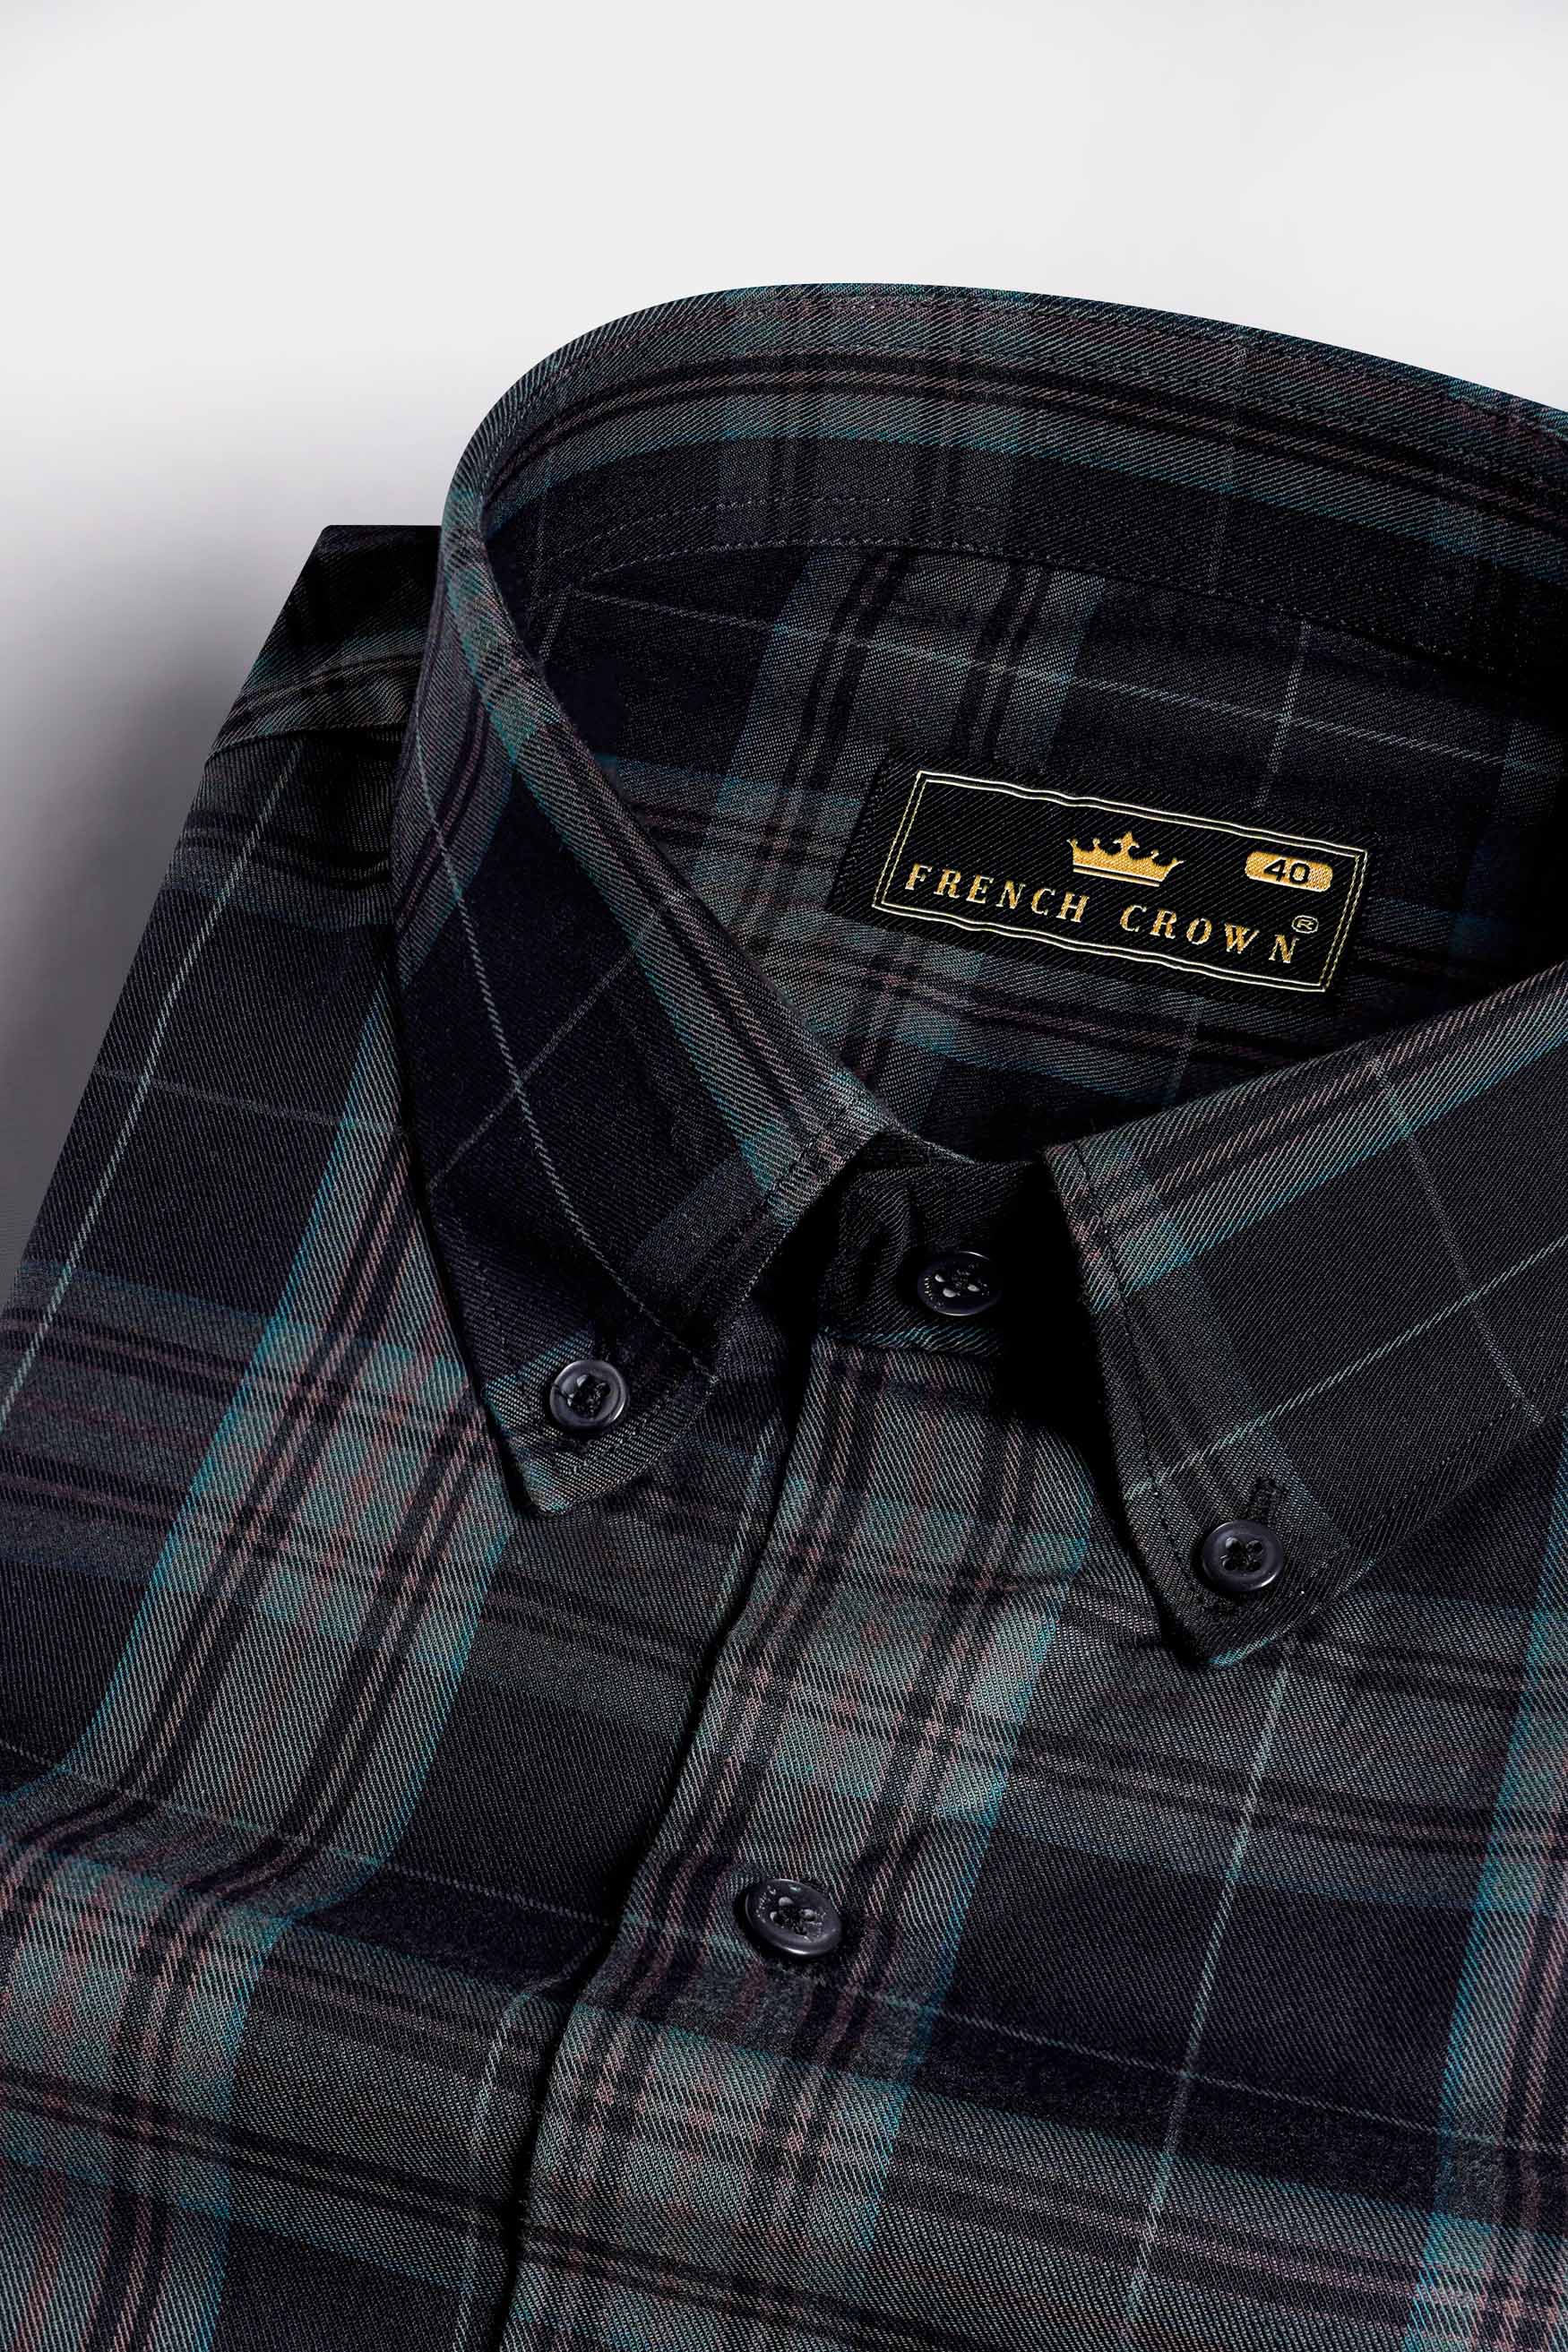 Cinder Black and Wenge Brown Twill Plaid Premium Cotton Button Down Shirt